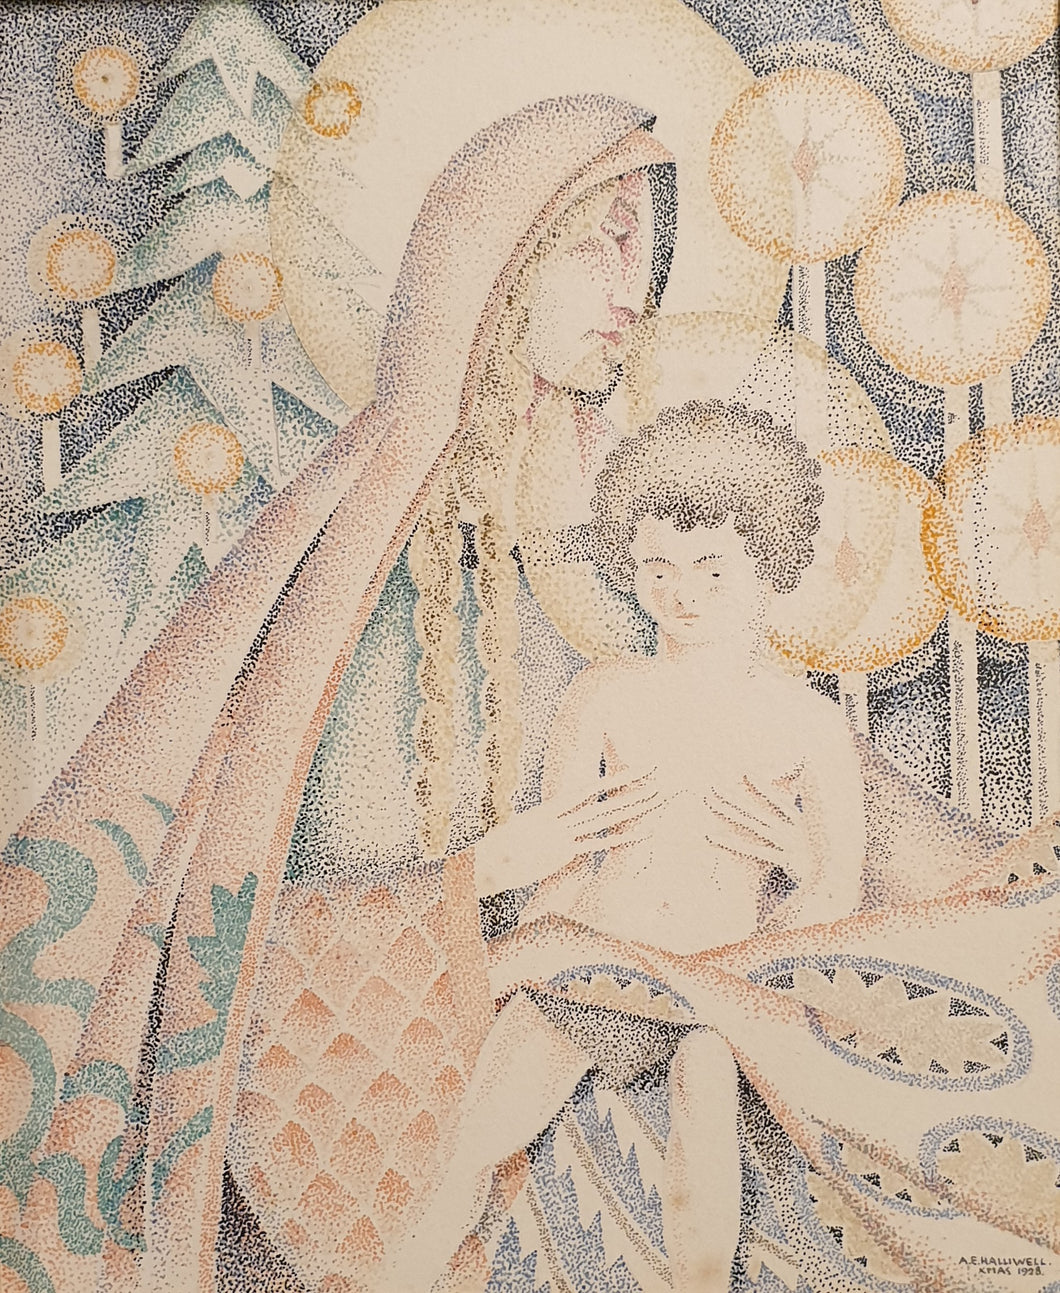 AE Halliwell Pointillist Watercolour Madonna And Child 1928